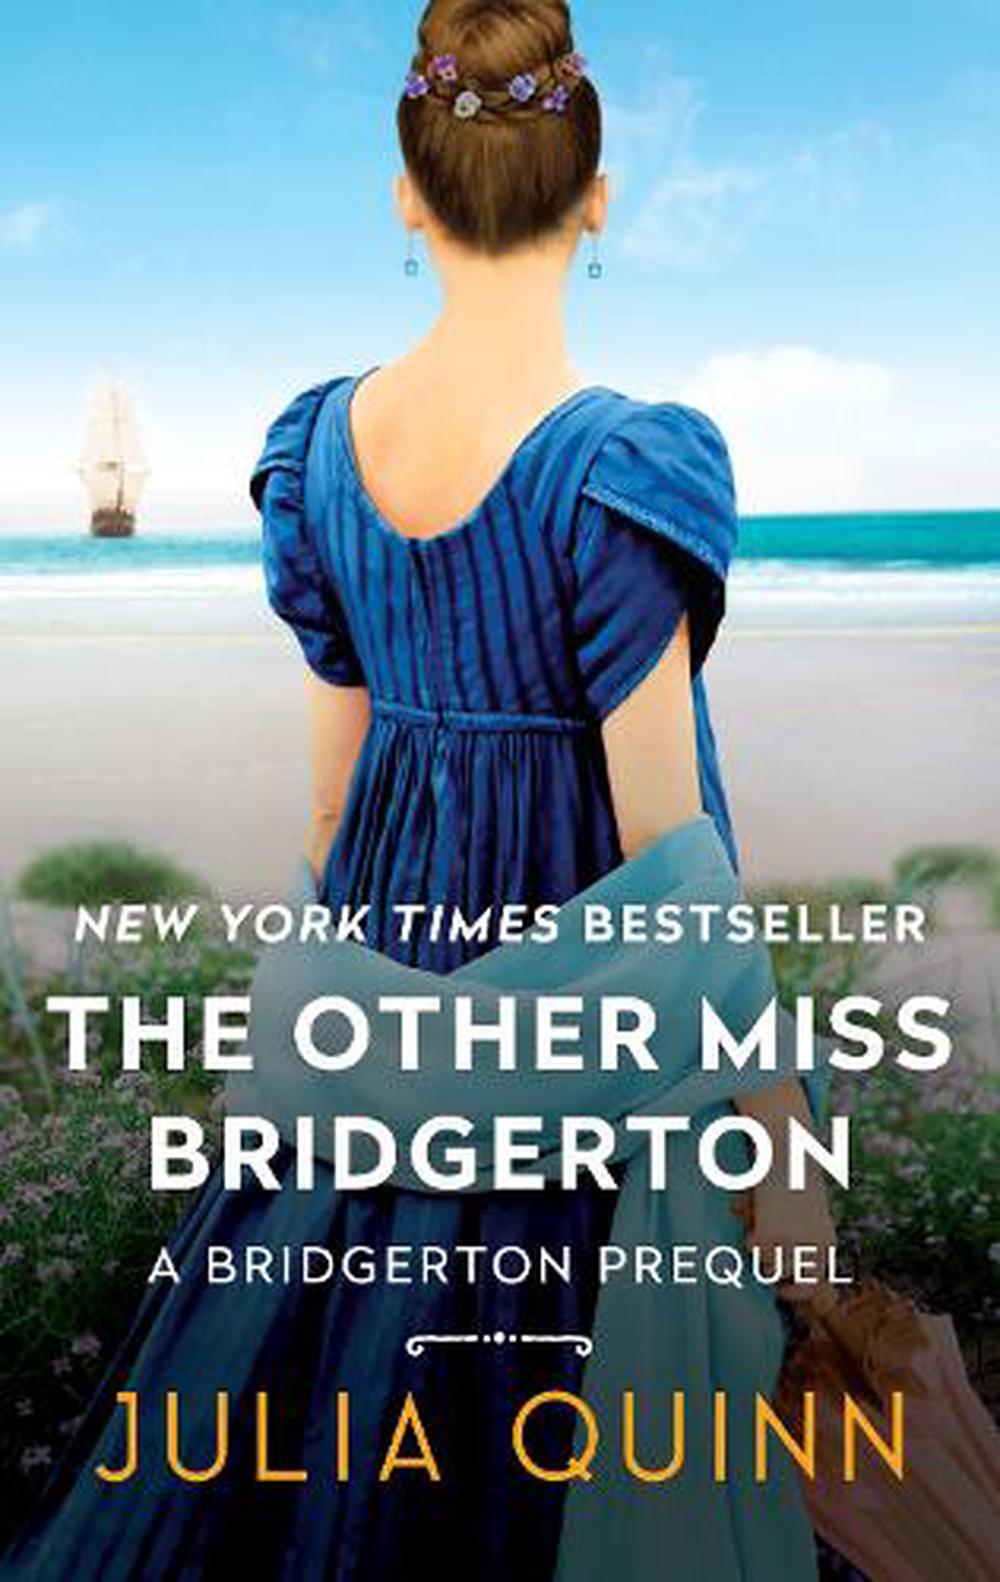 The Other Miss Bridgerton by Julia Quinn, Paperback, 9780062388209